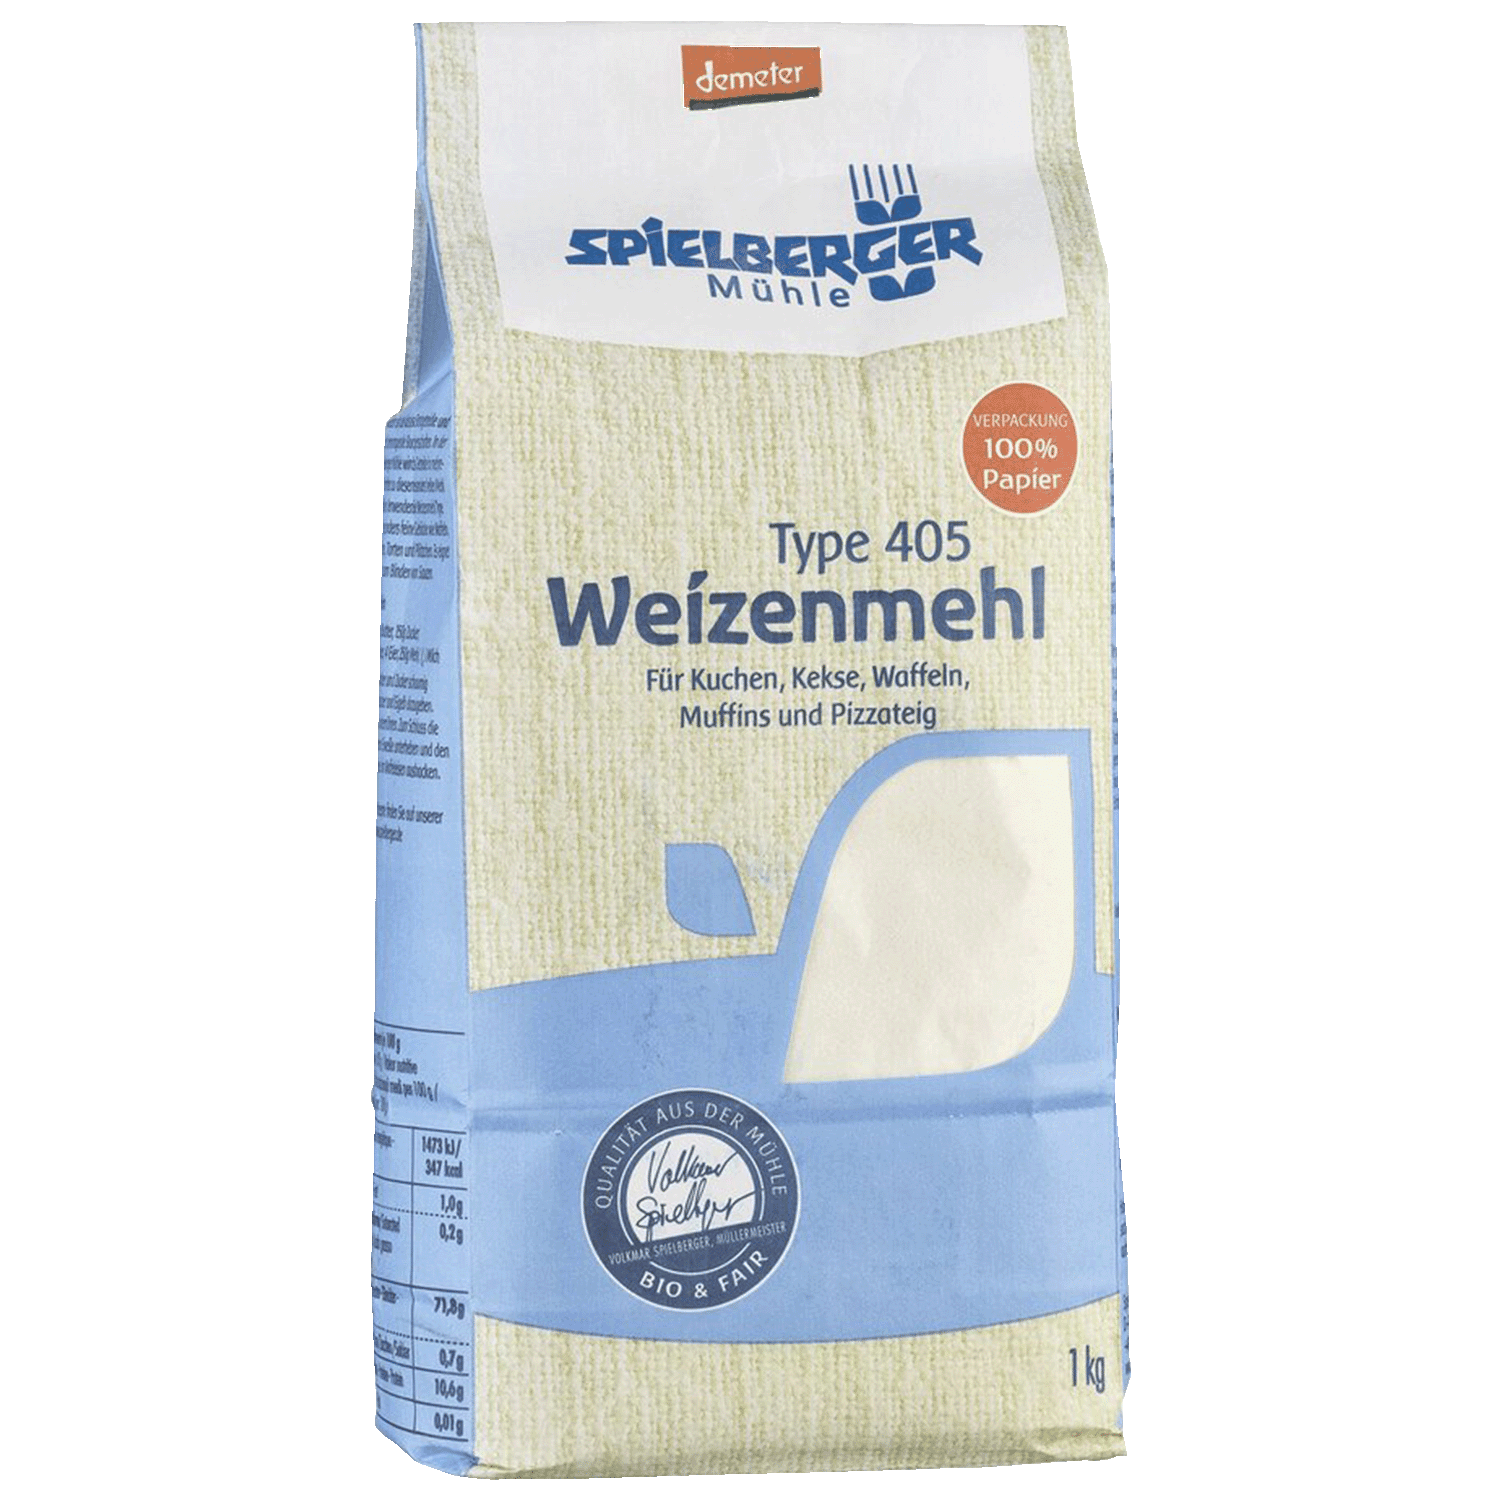 Wheat flour type 405, Organic, 1kg